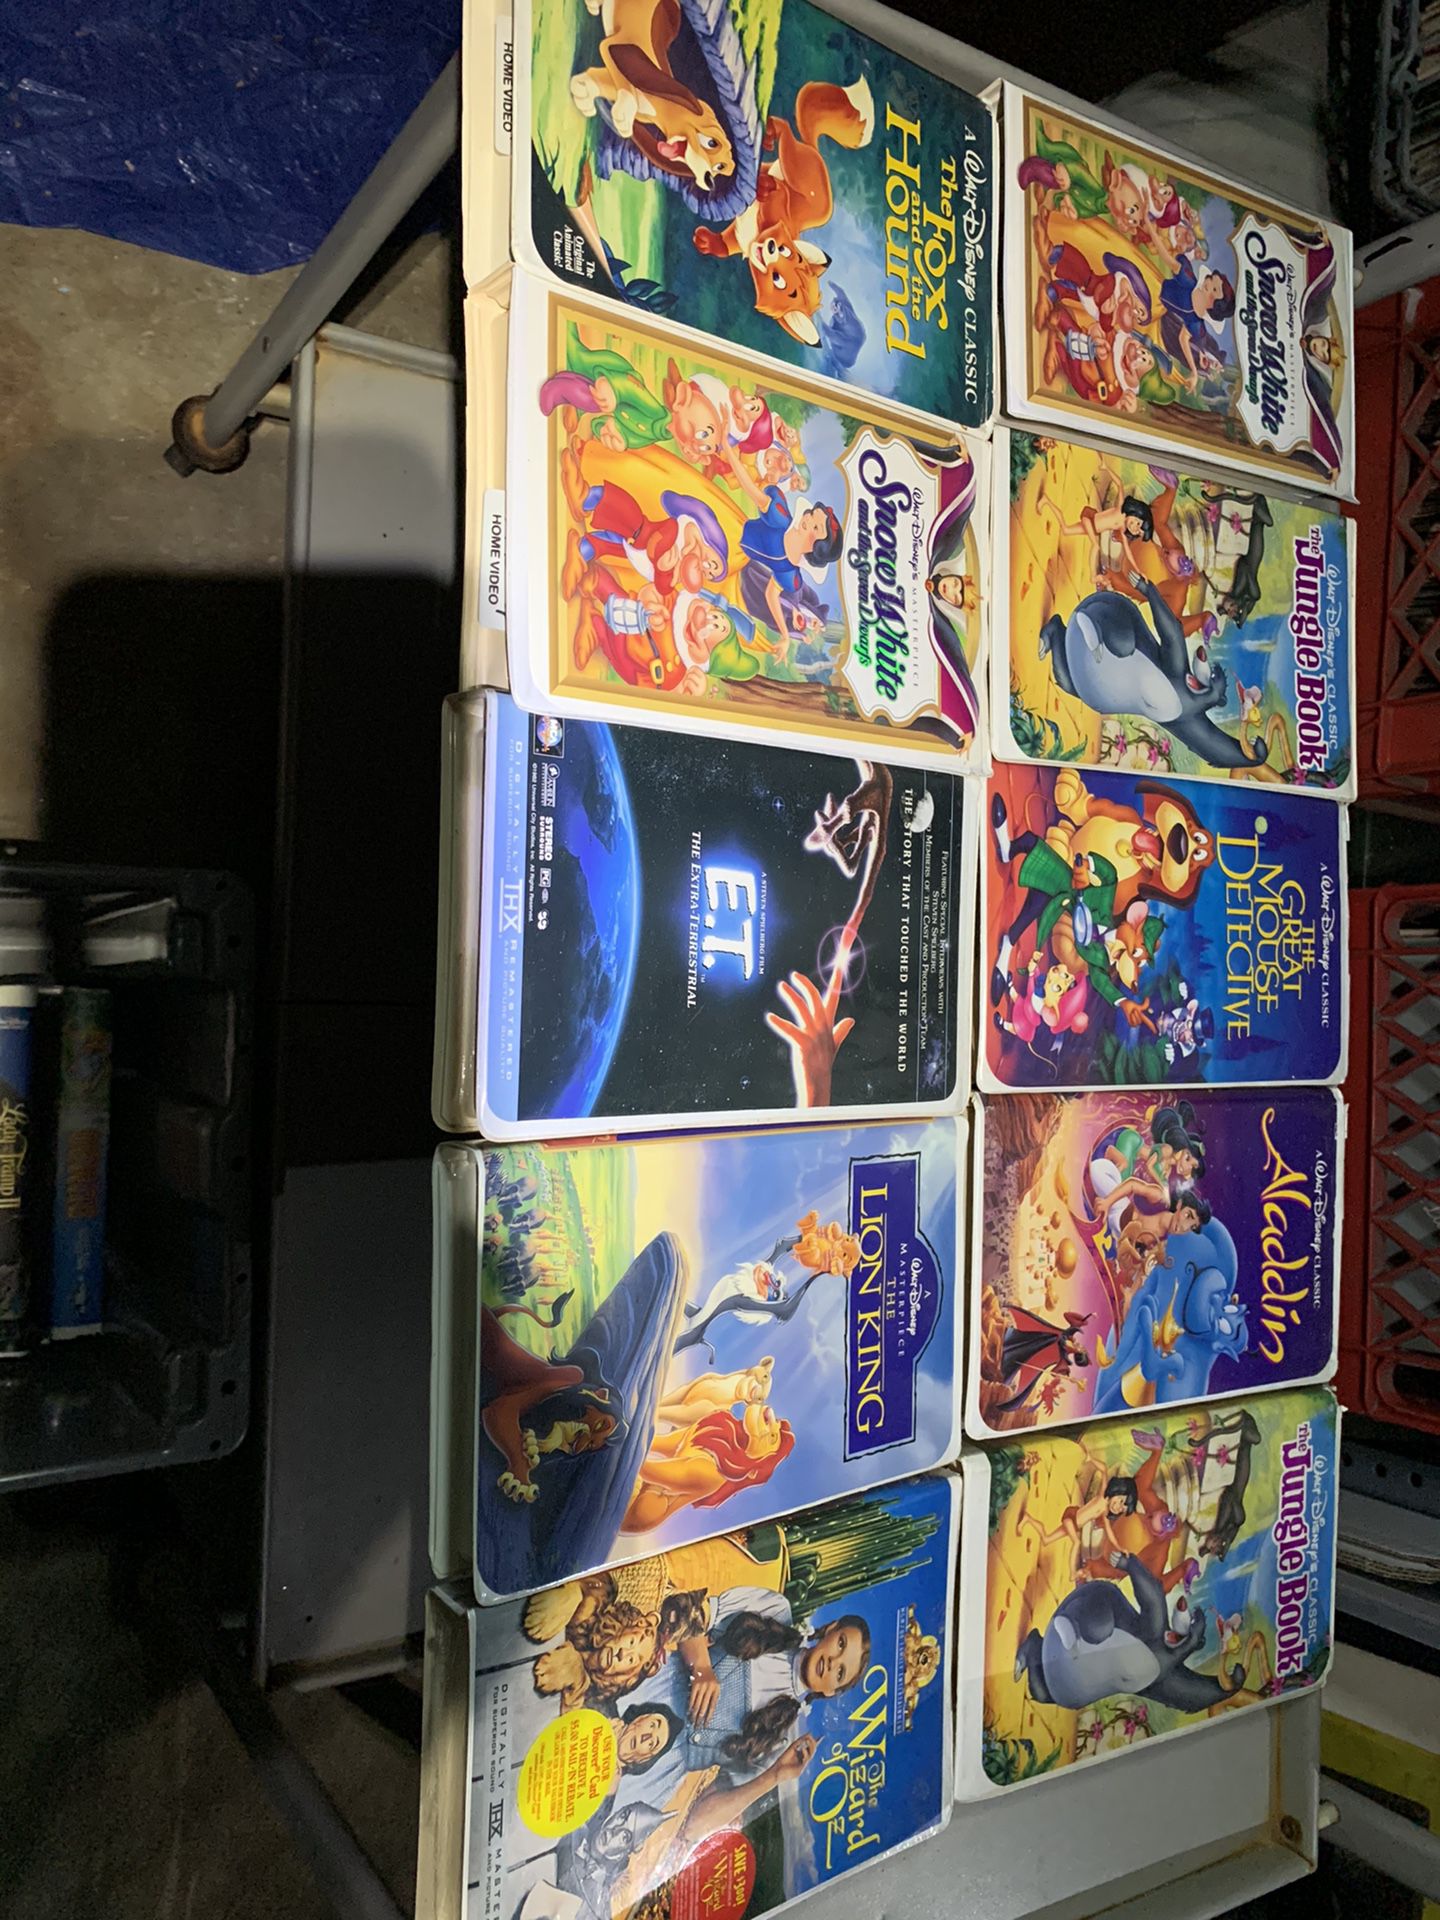 Disney VHS tapes lot